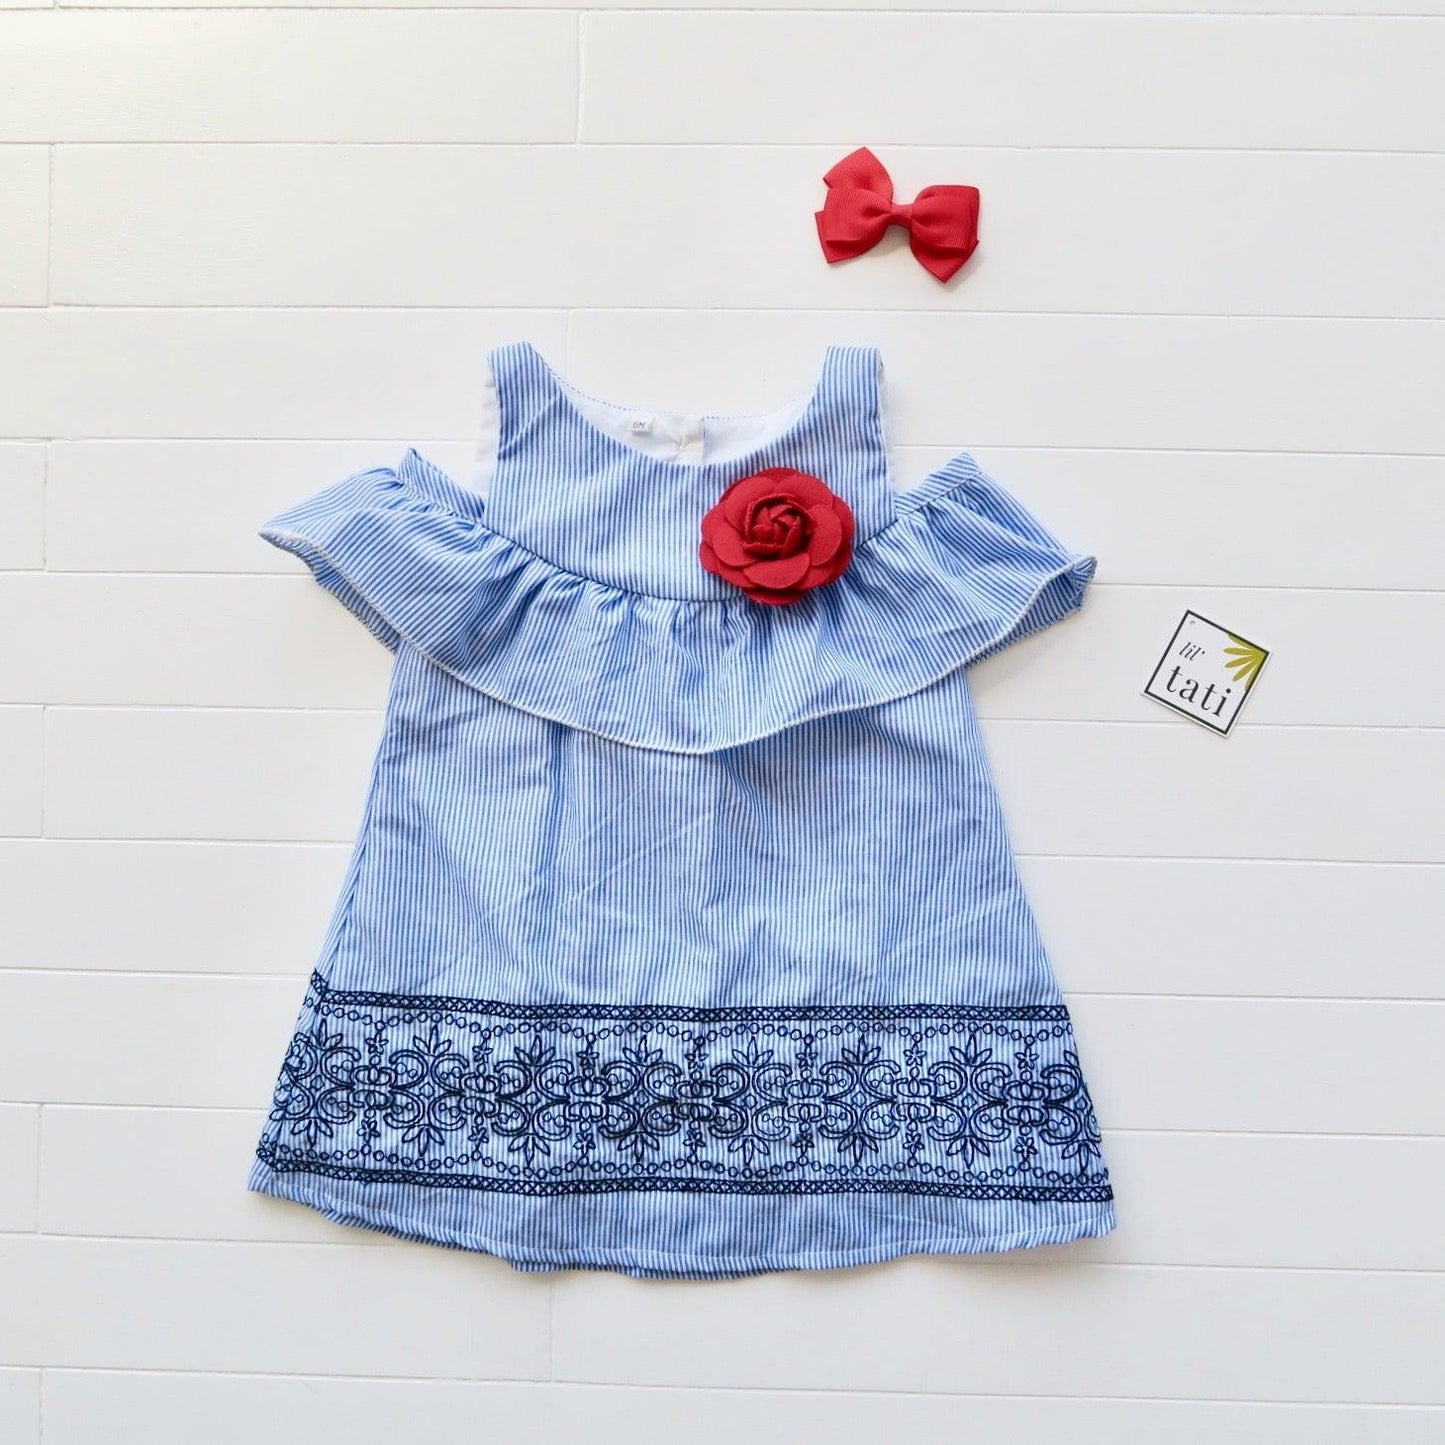 Hyacinth Dress in Blue Stripes Embroidery - Lil' Tati